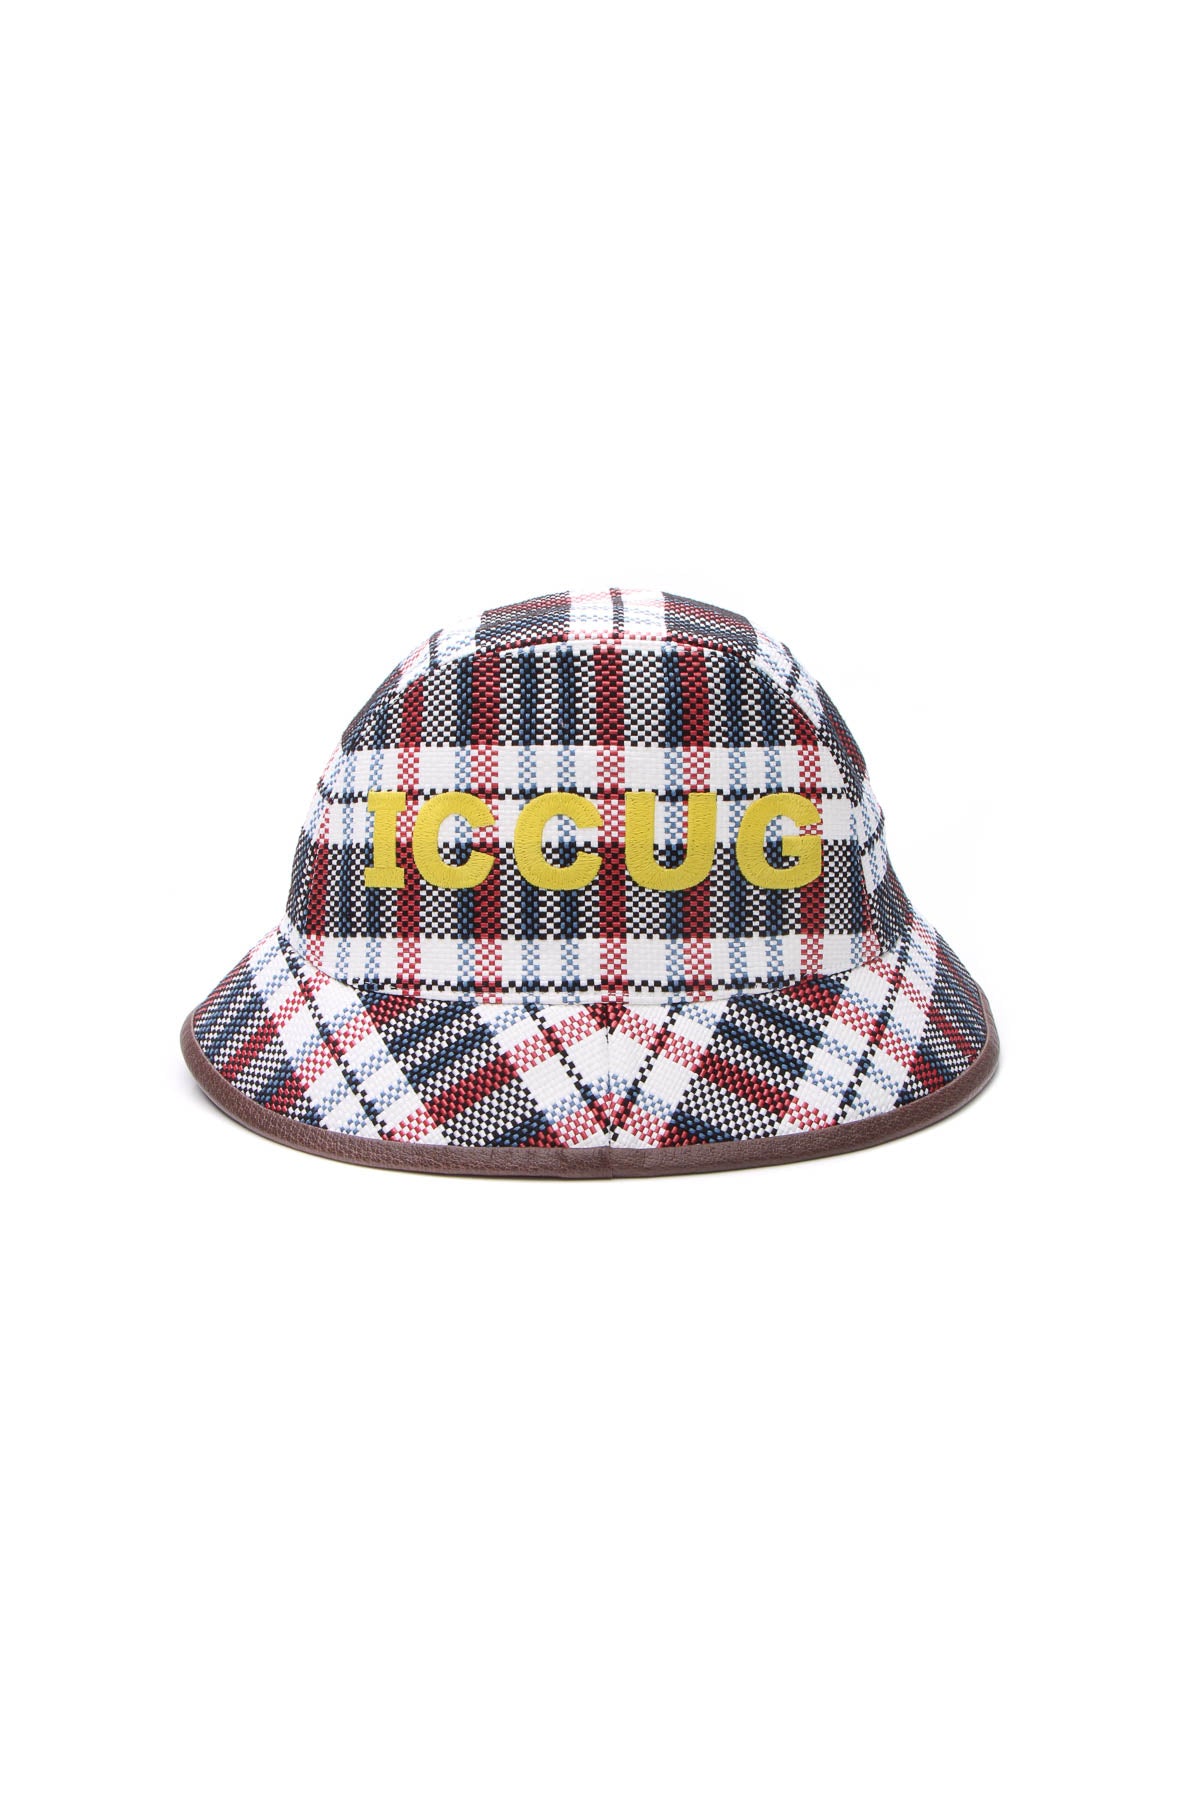 Gucci Hats for Men, Bucket Hats